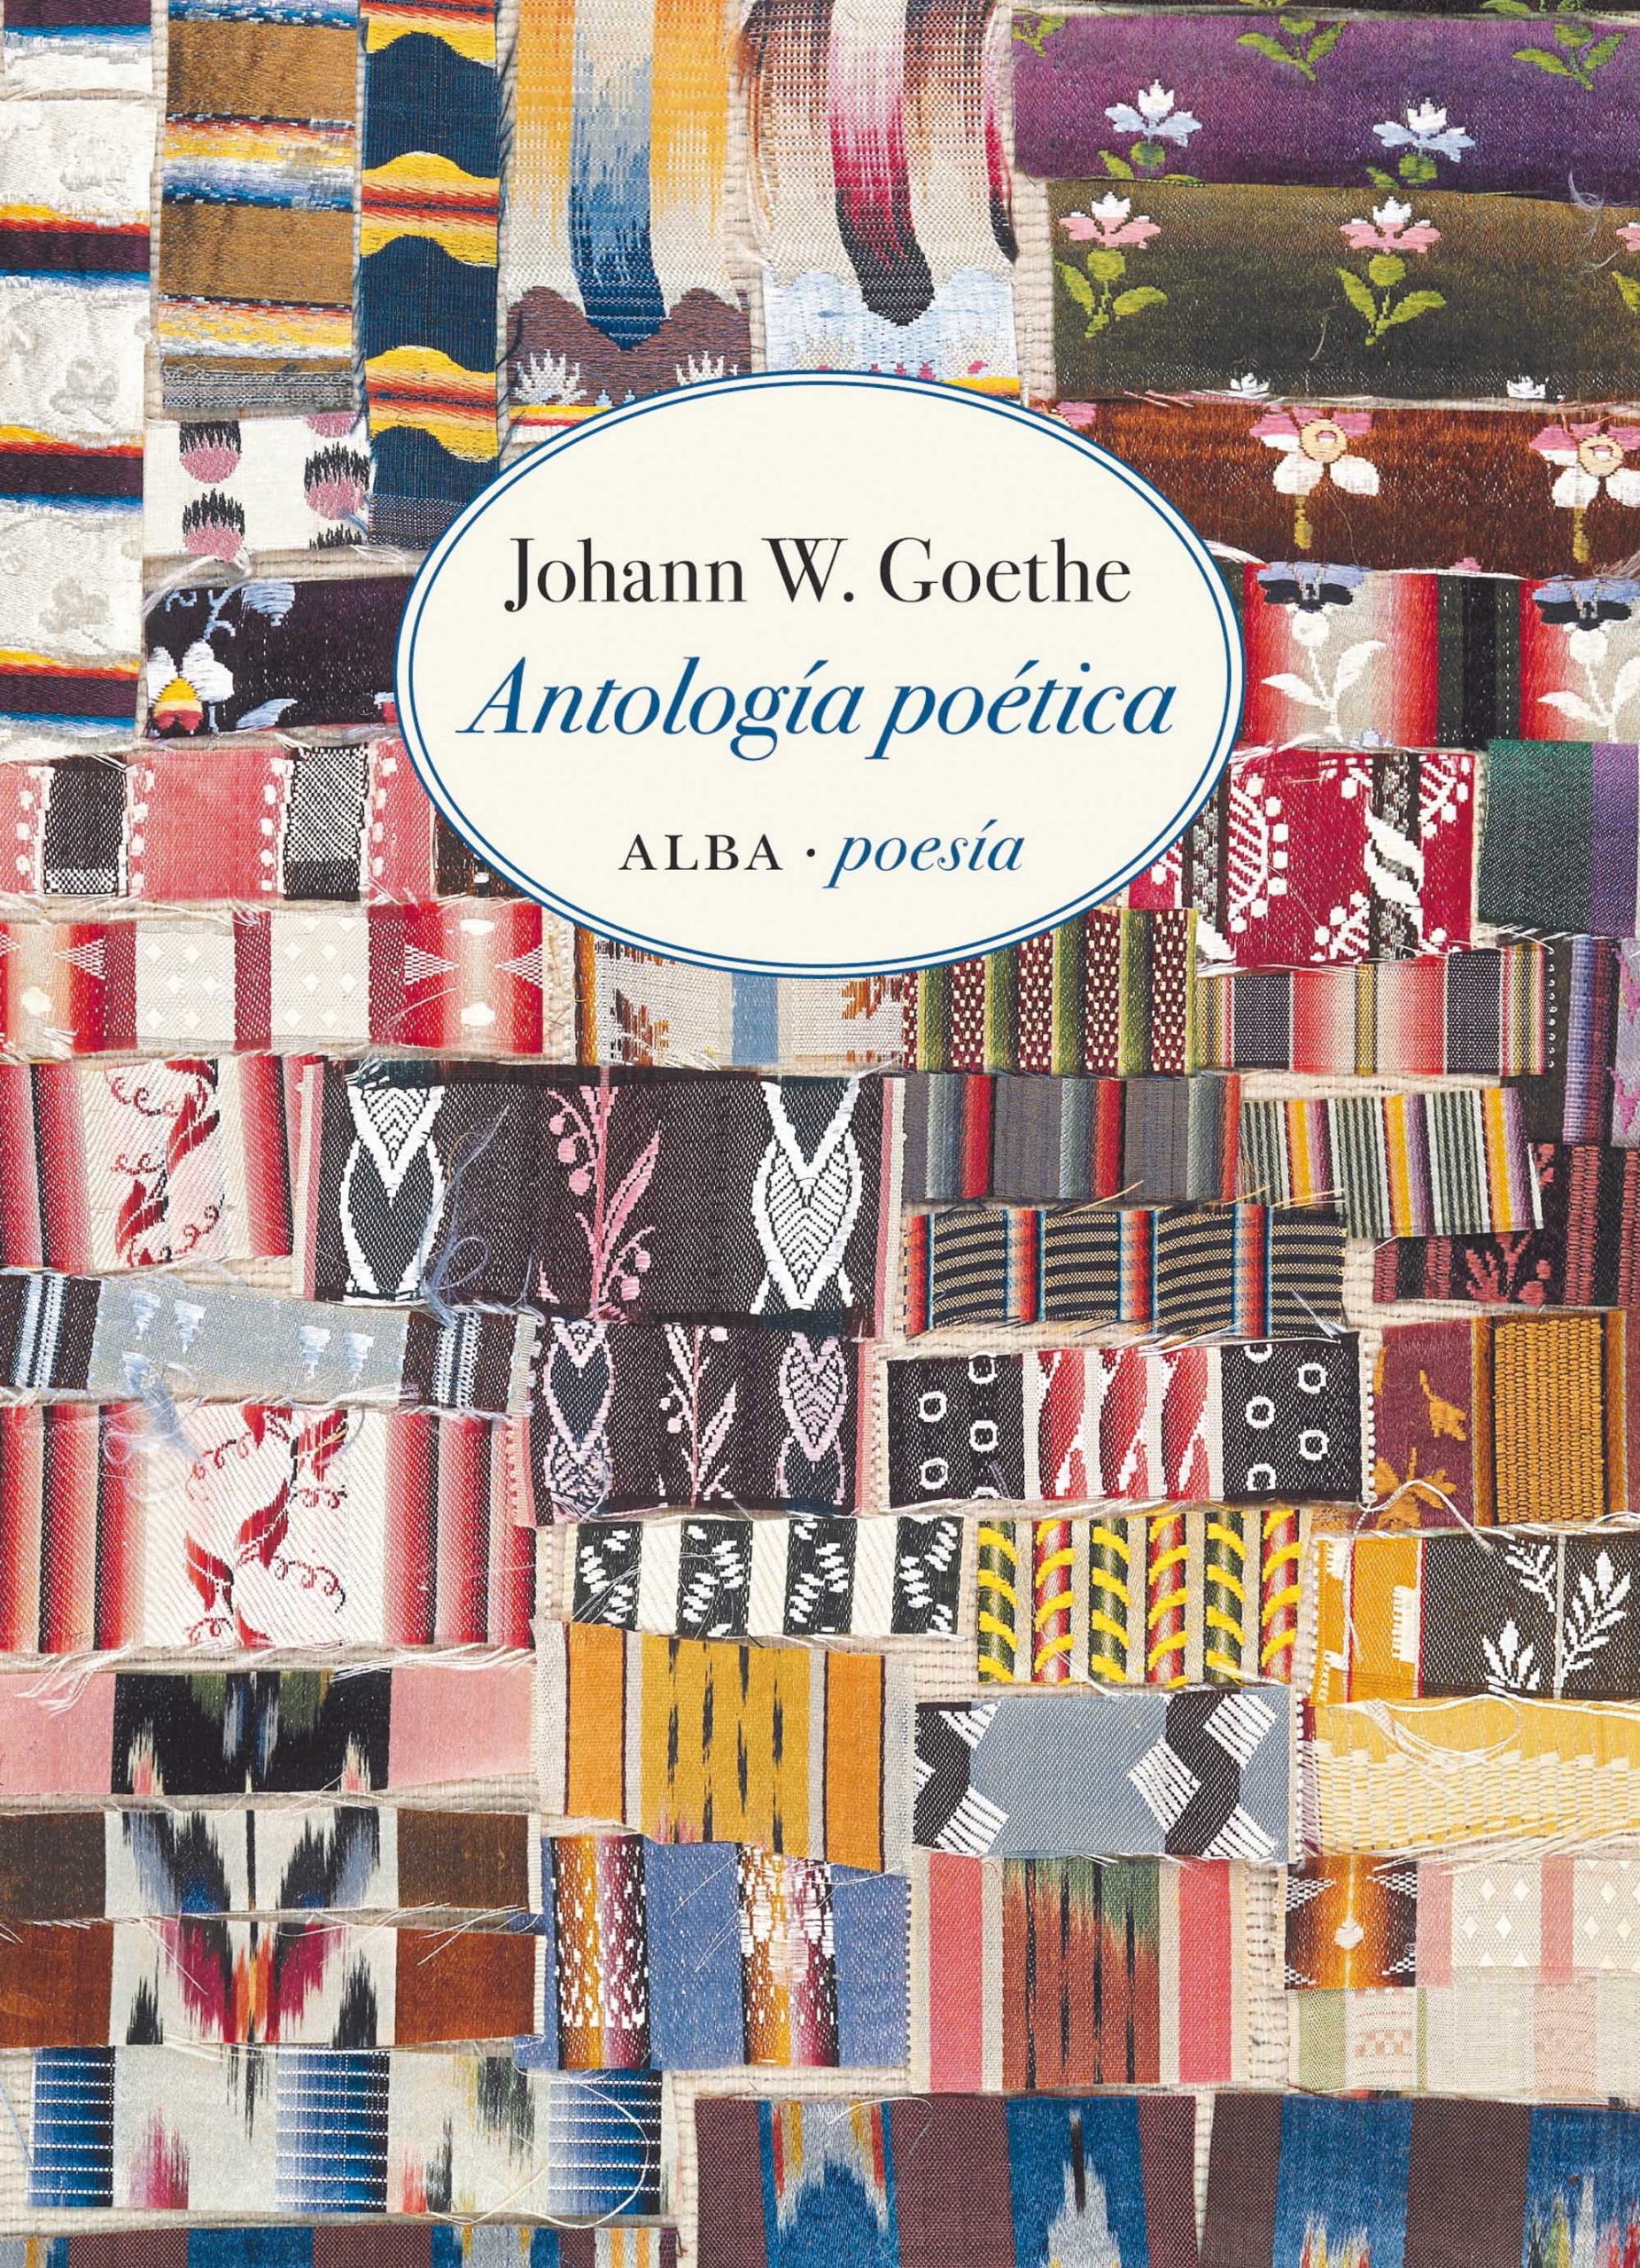 Zenda recomienda: Antología poética, de Johann W. Goethe